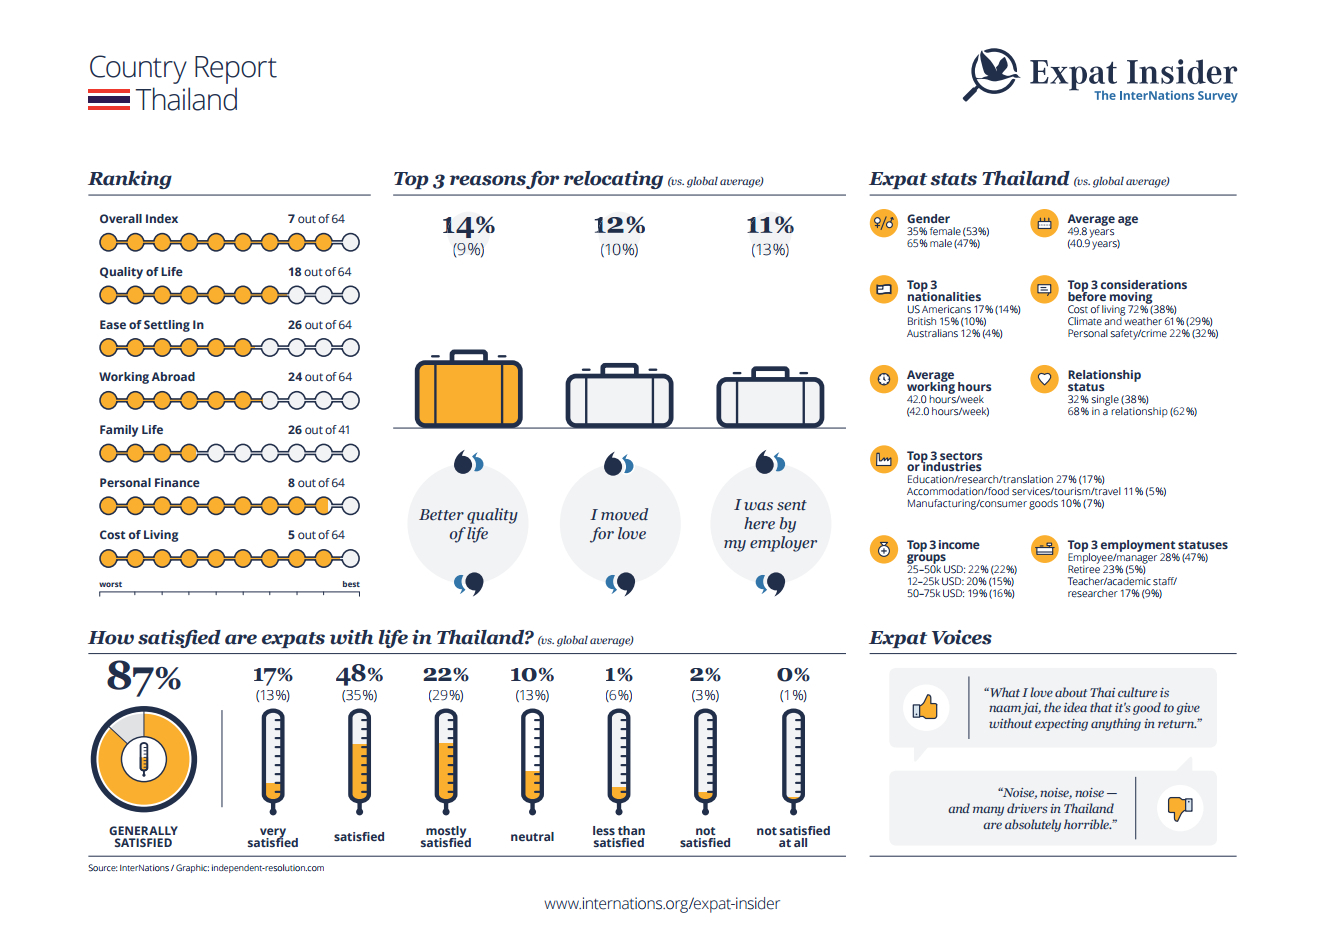 Expat statistics for Thailand - infographic